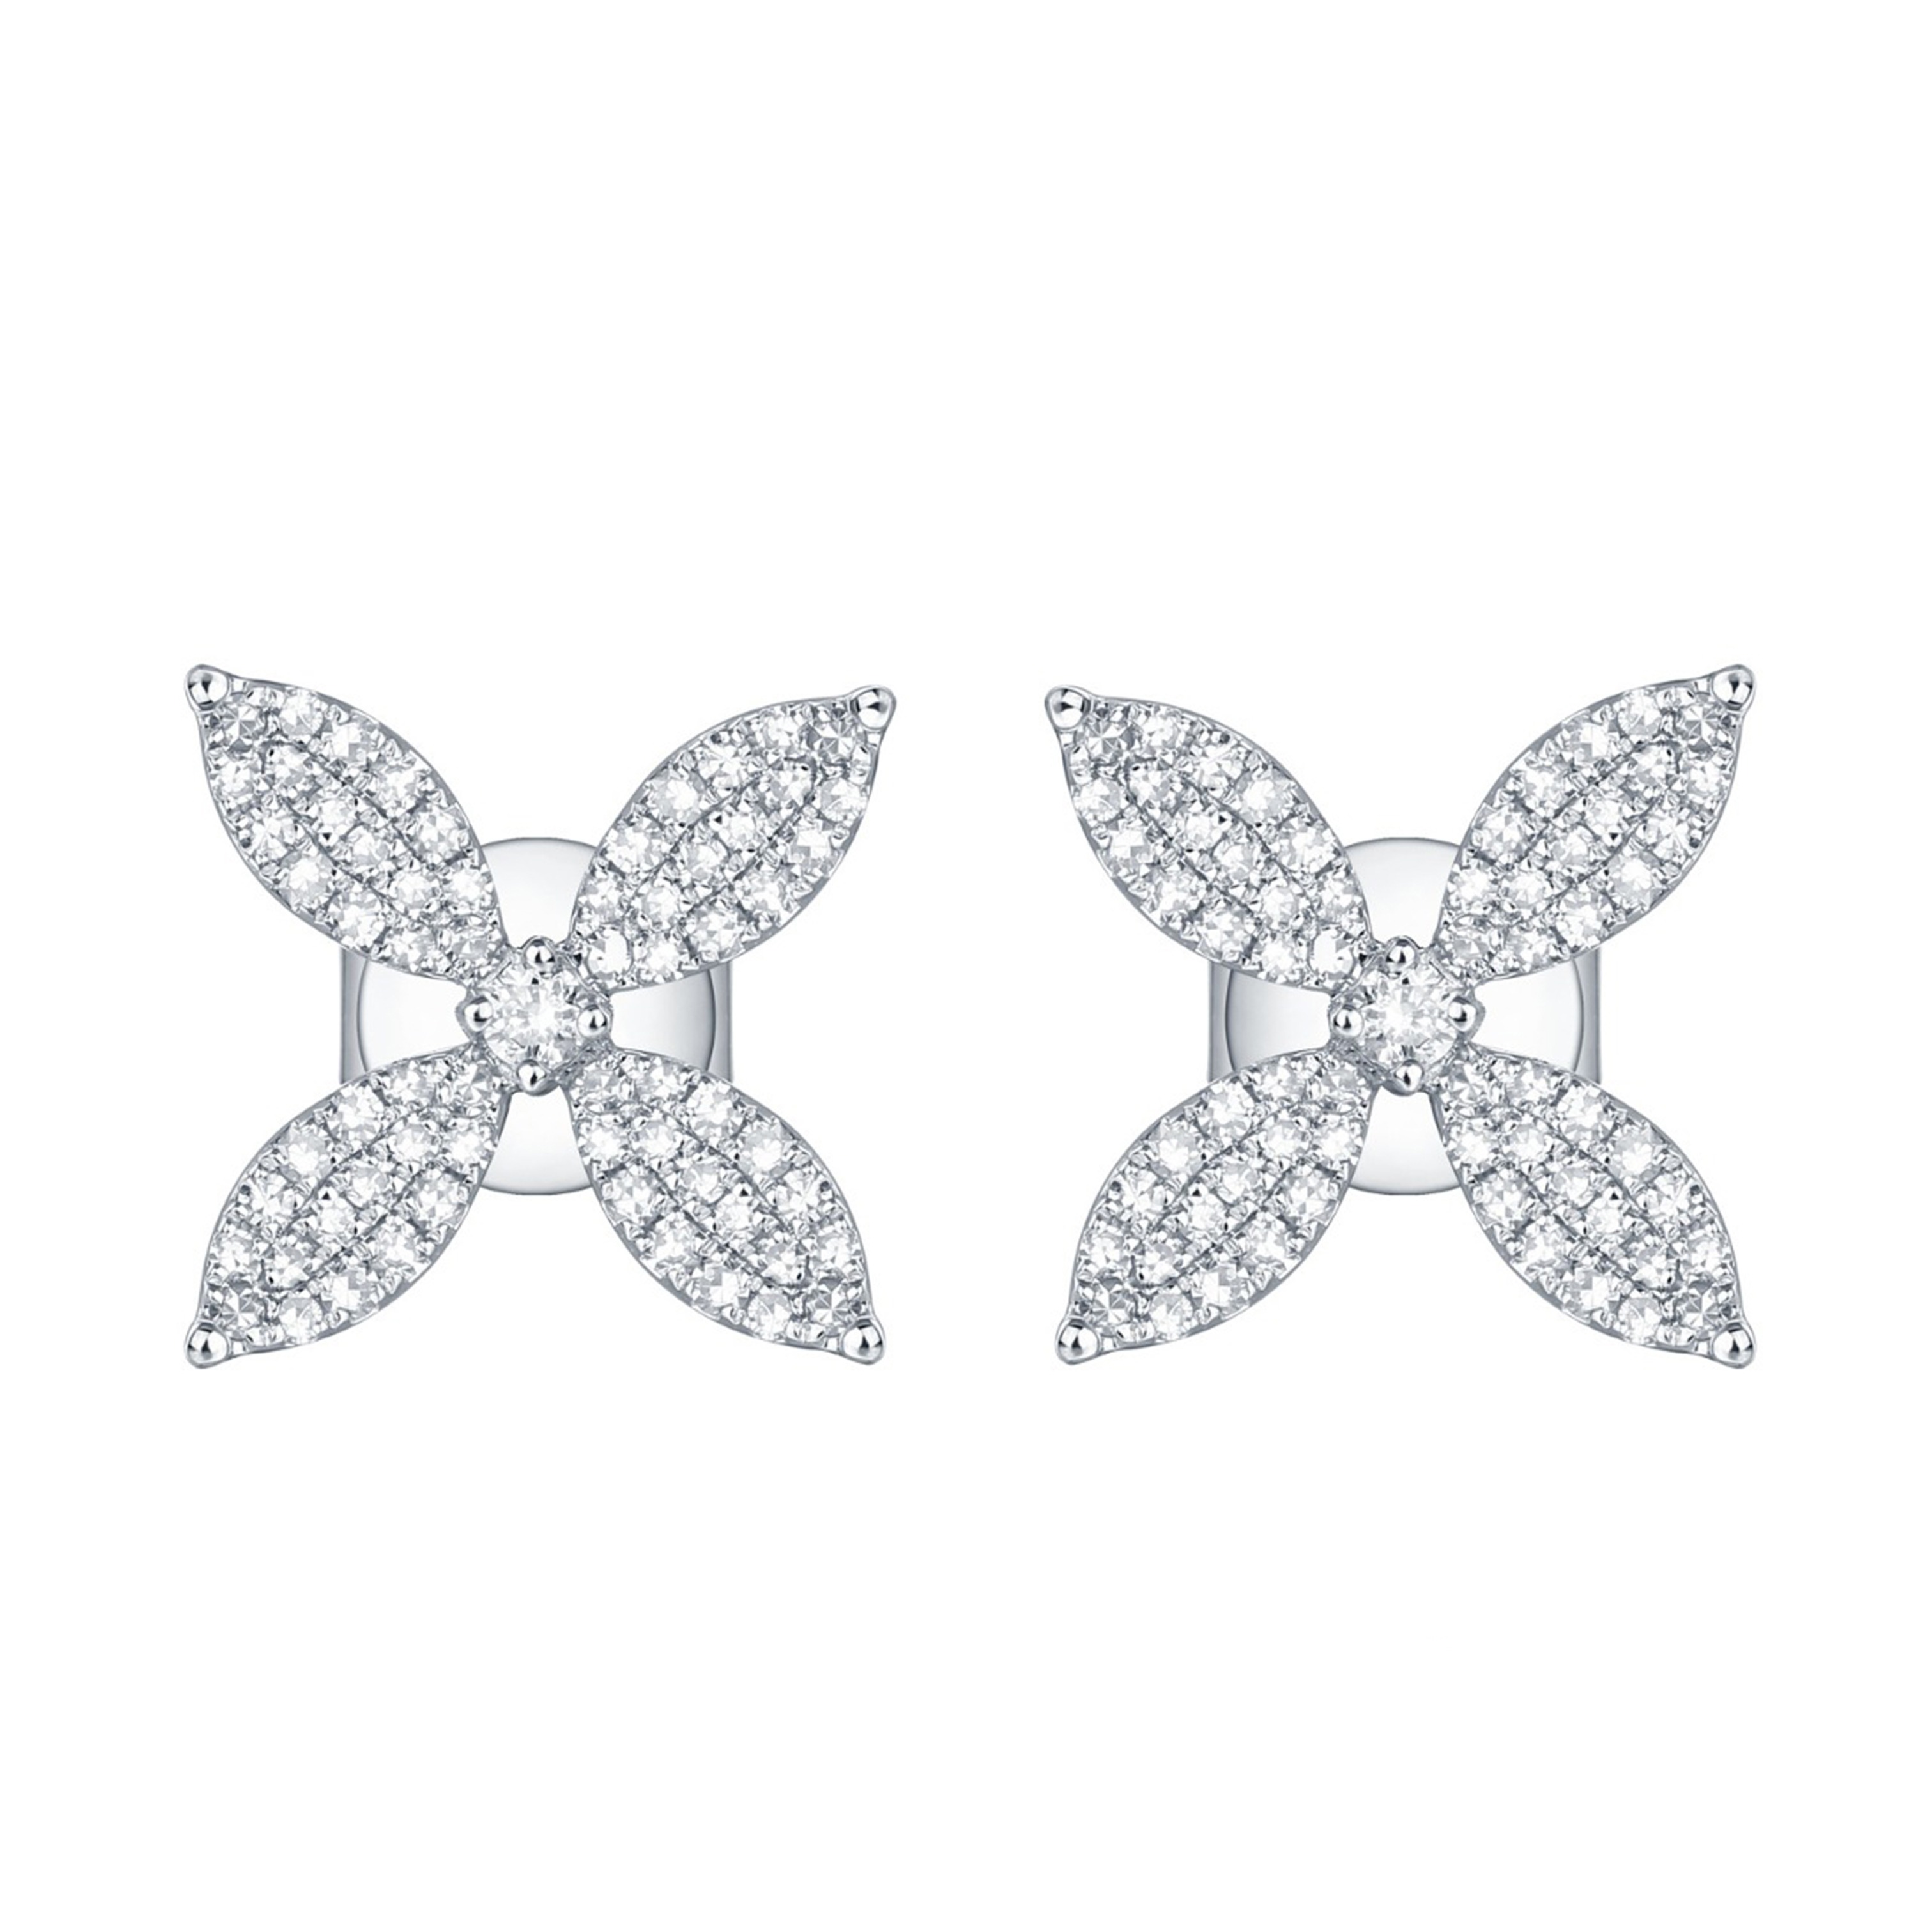 Petals Diamond Earrings